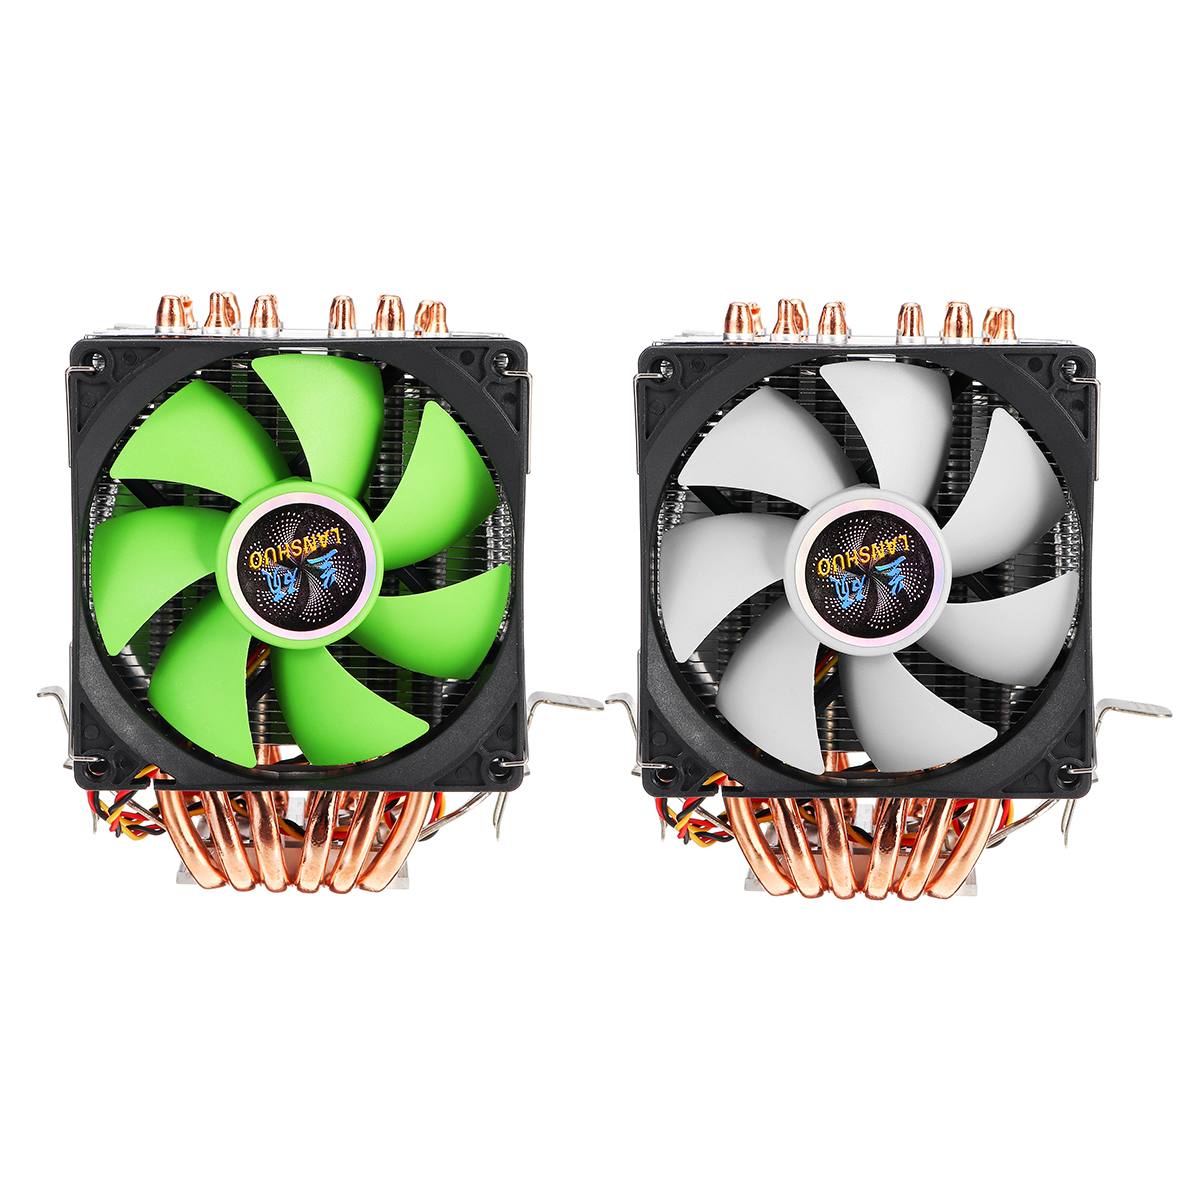 Aurora 3 Pin Double Fan 6 Copper Tube Dual Tower CPU Cooling Fan Cooler Heatsink for Intel AMD 2